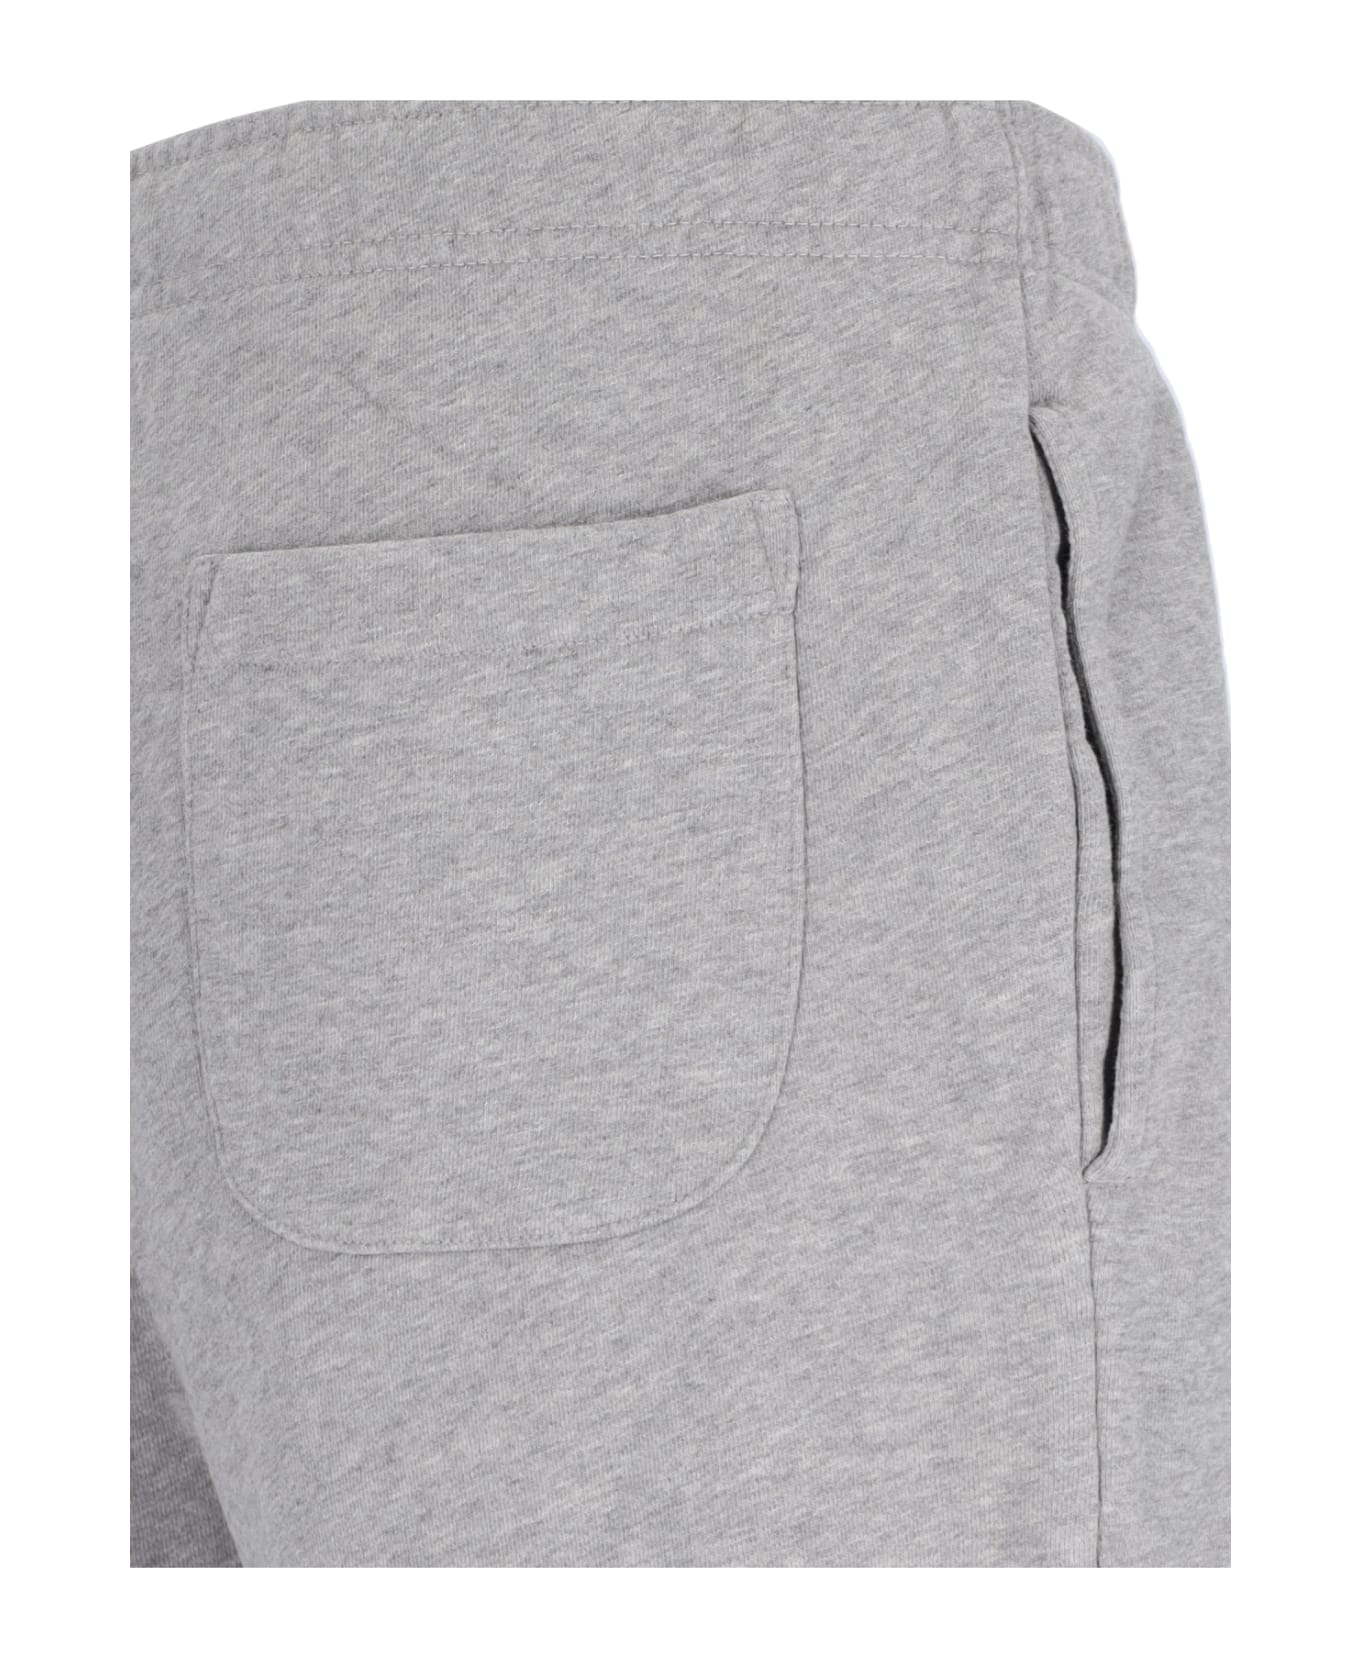 Polo Ralph Lauren Track Shorts - Gray ボトムス